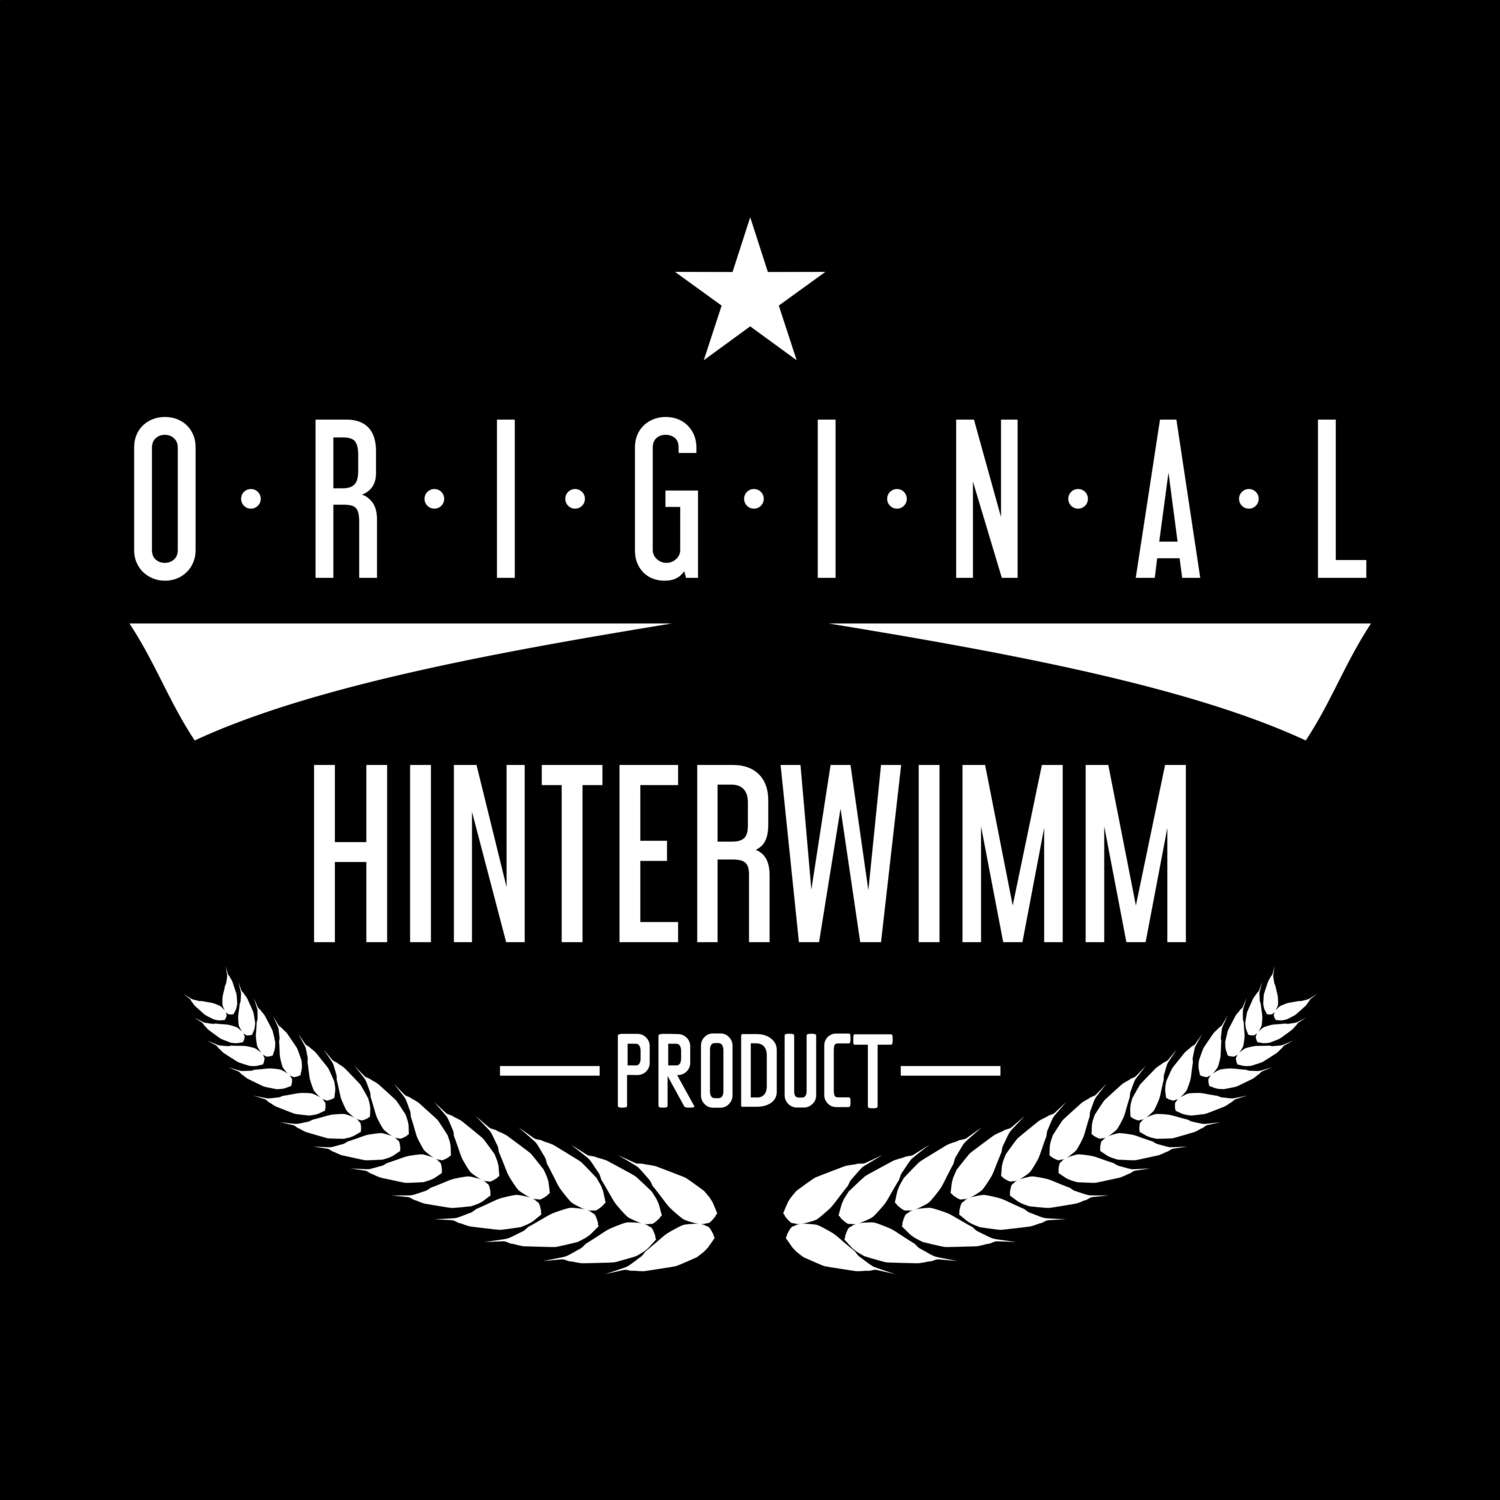 Hinterwimm T-Shirt »Original Product«